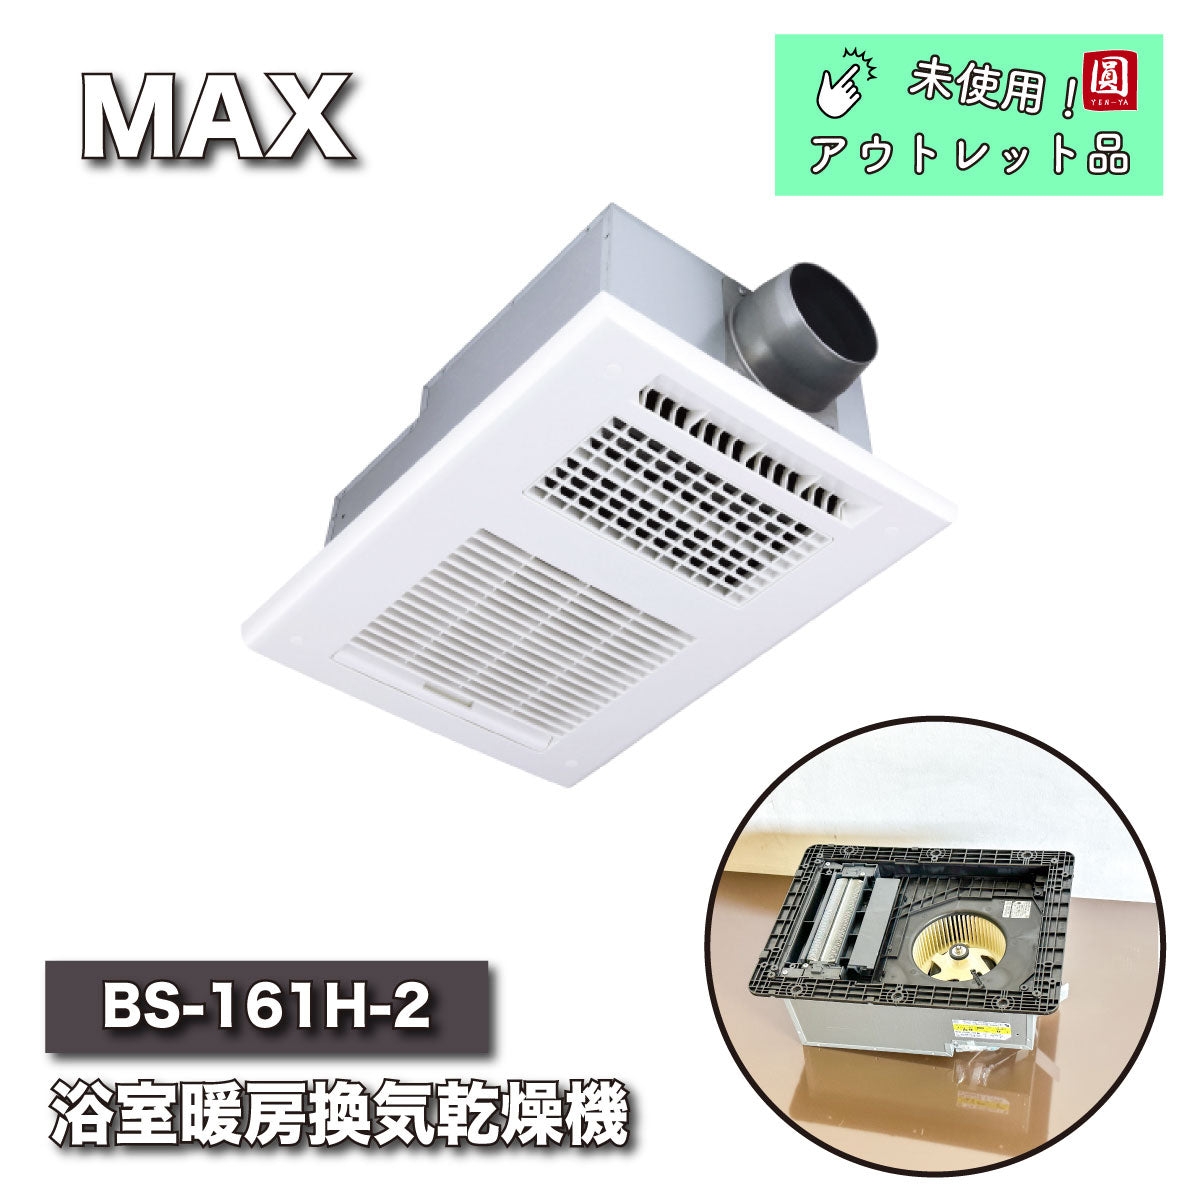 MAX(マックス) 浴室暖房換気乾燥機 100V BS-141H-2 - エアコン